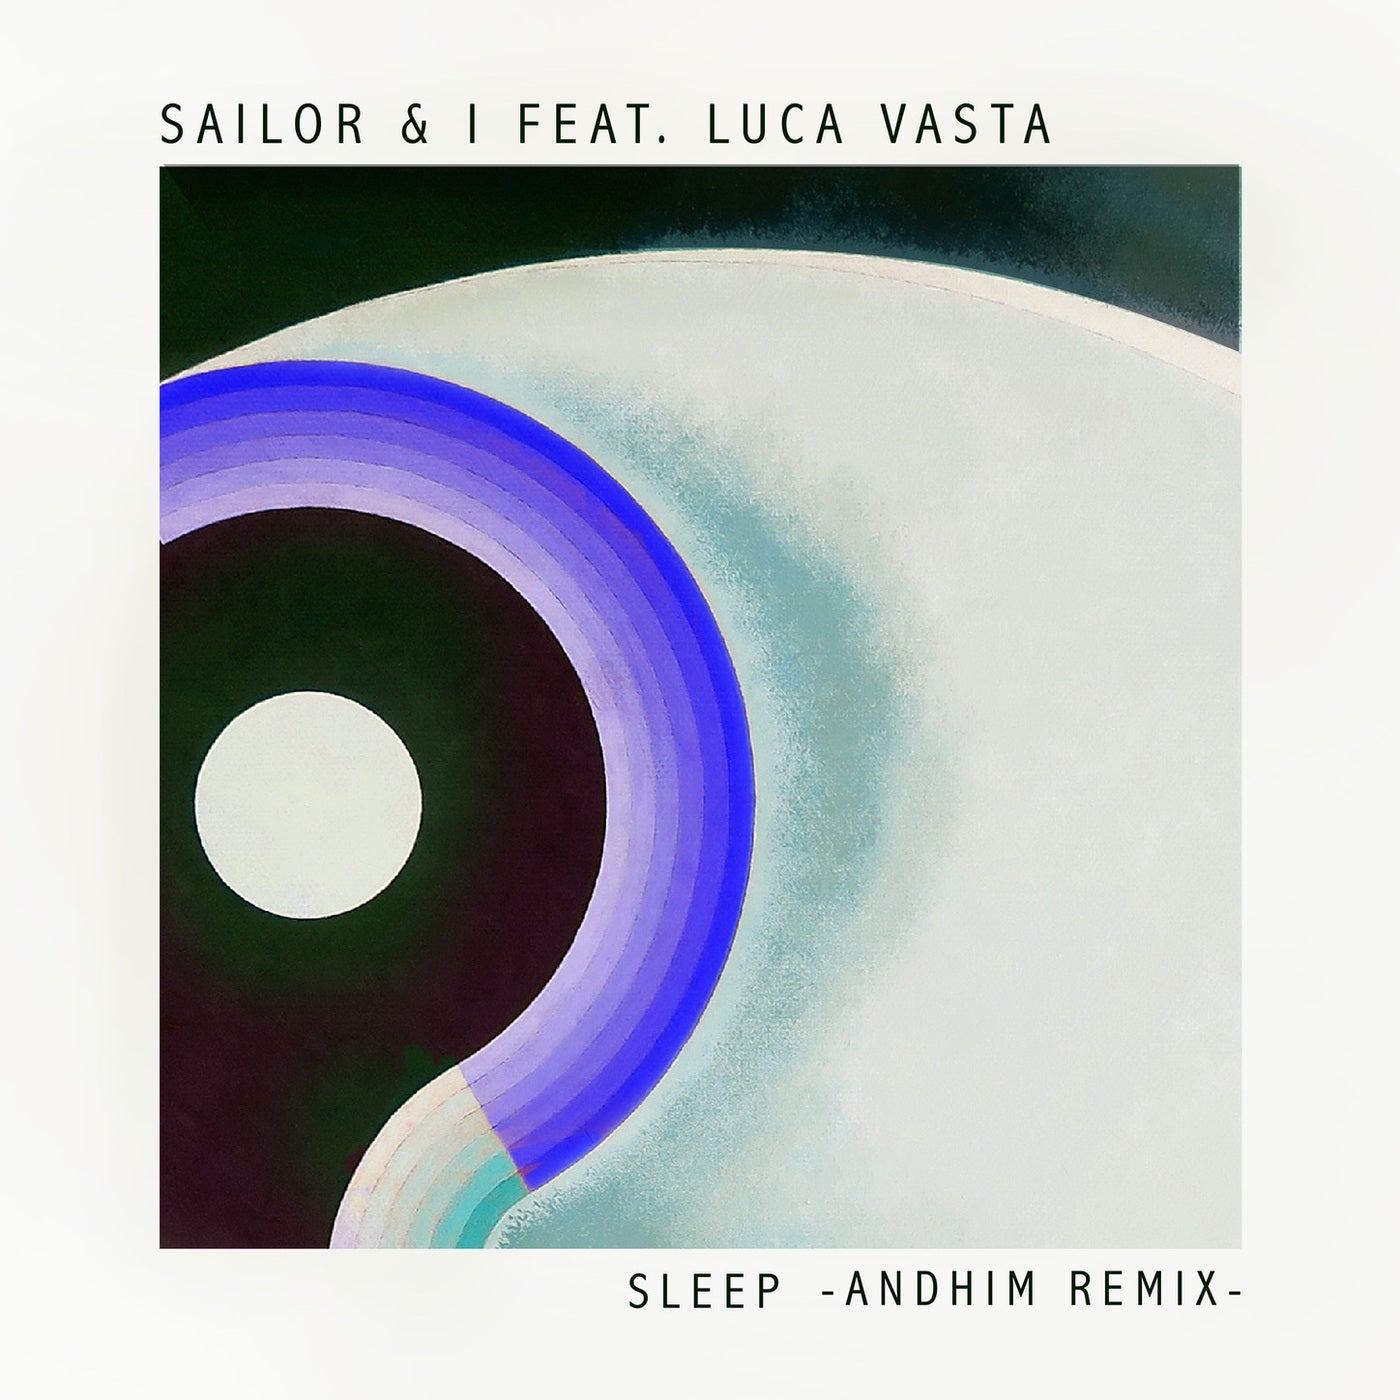 image cover: Sailor & I, Luca Vasta - Sleep (Andhim Extended Remix) / MP010BP